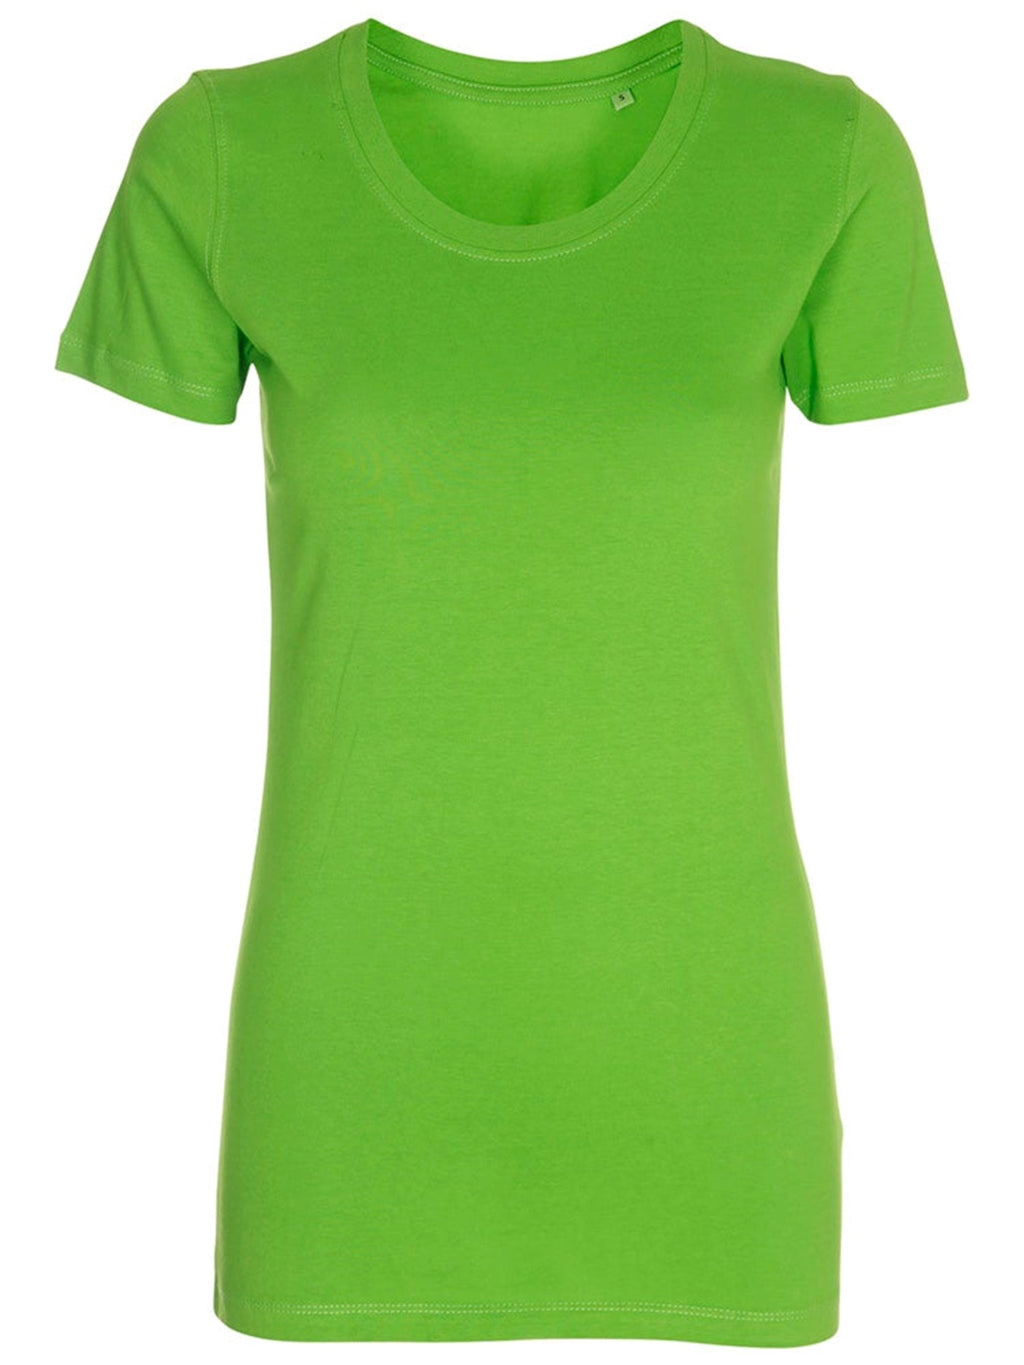 Fitted t-shirt - LimeGrønn